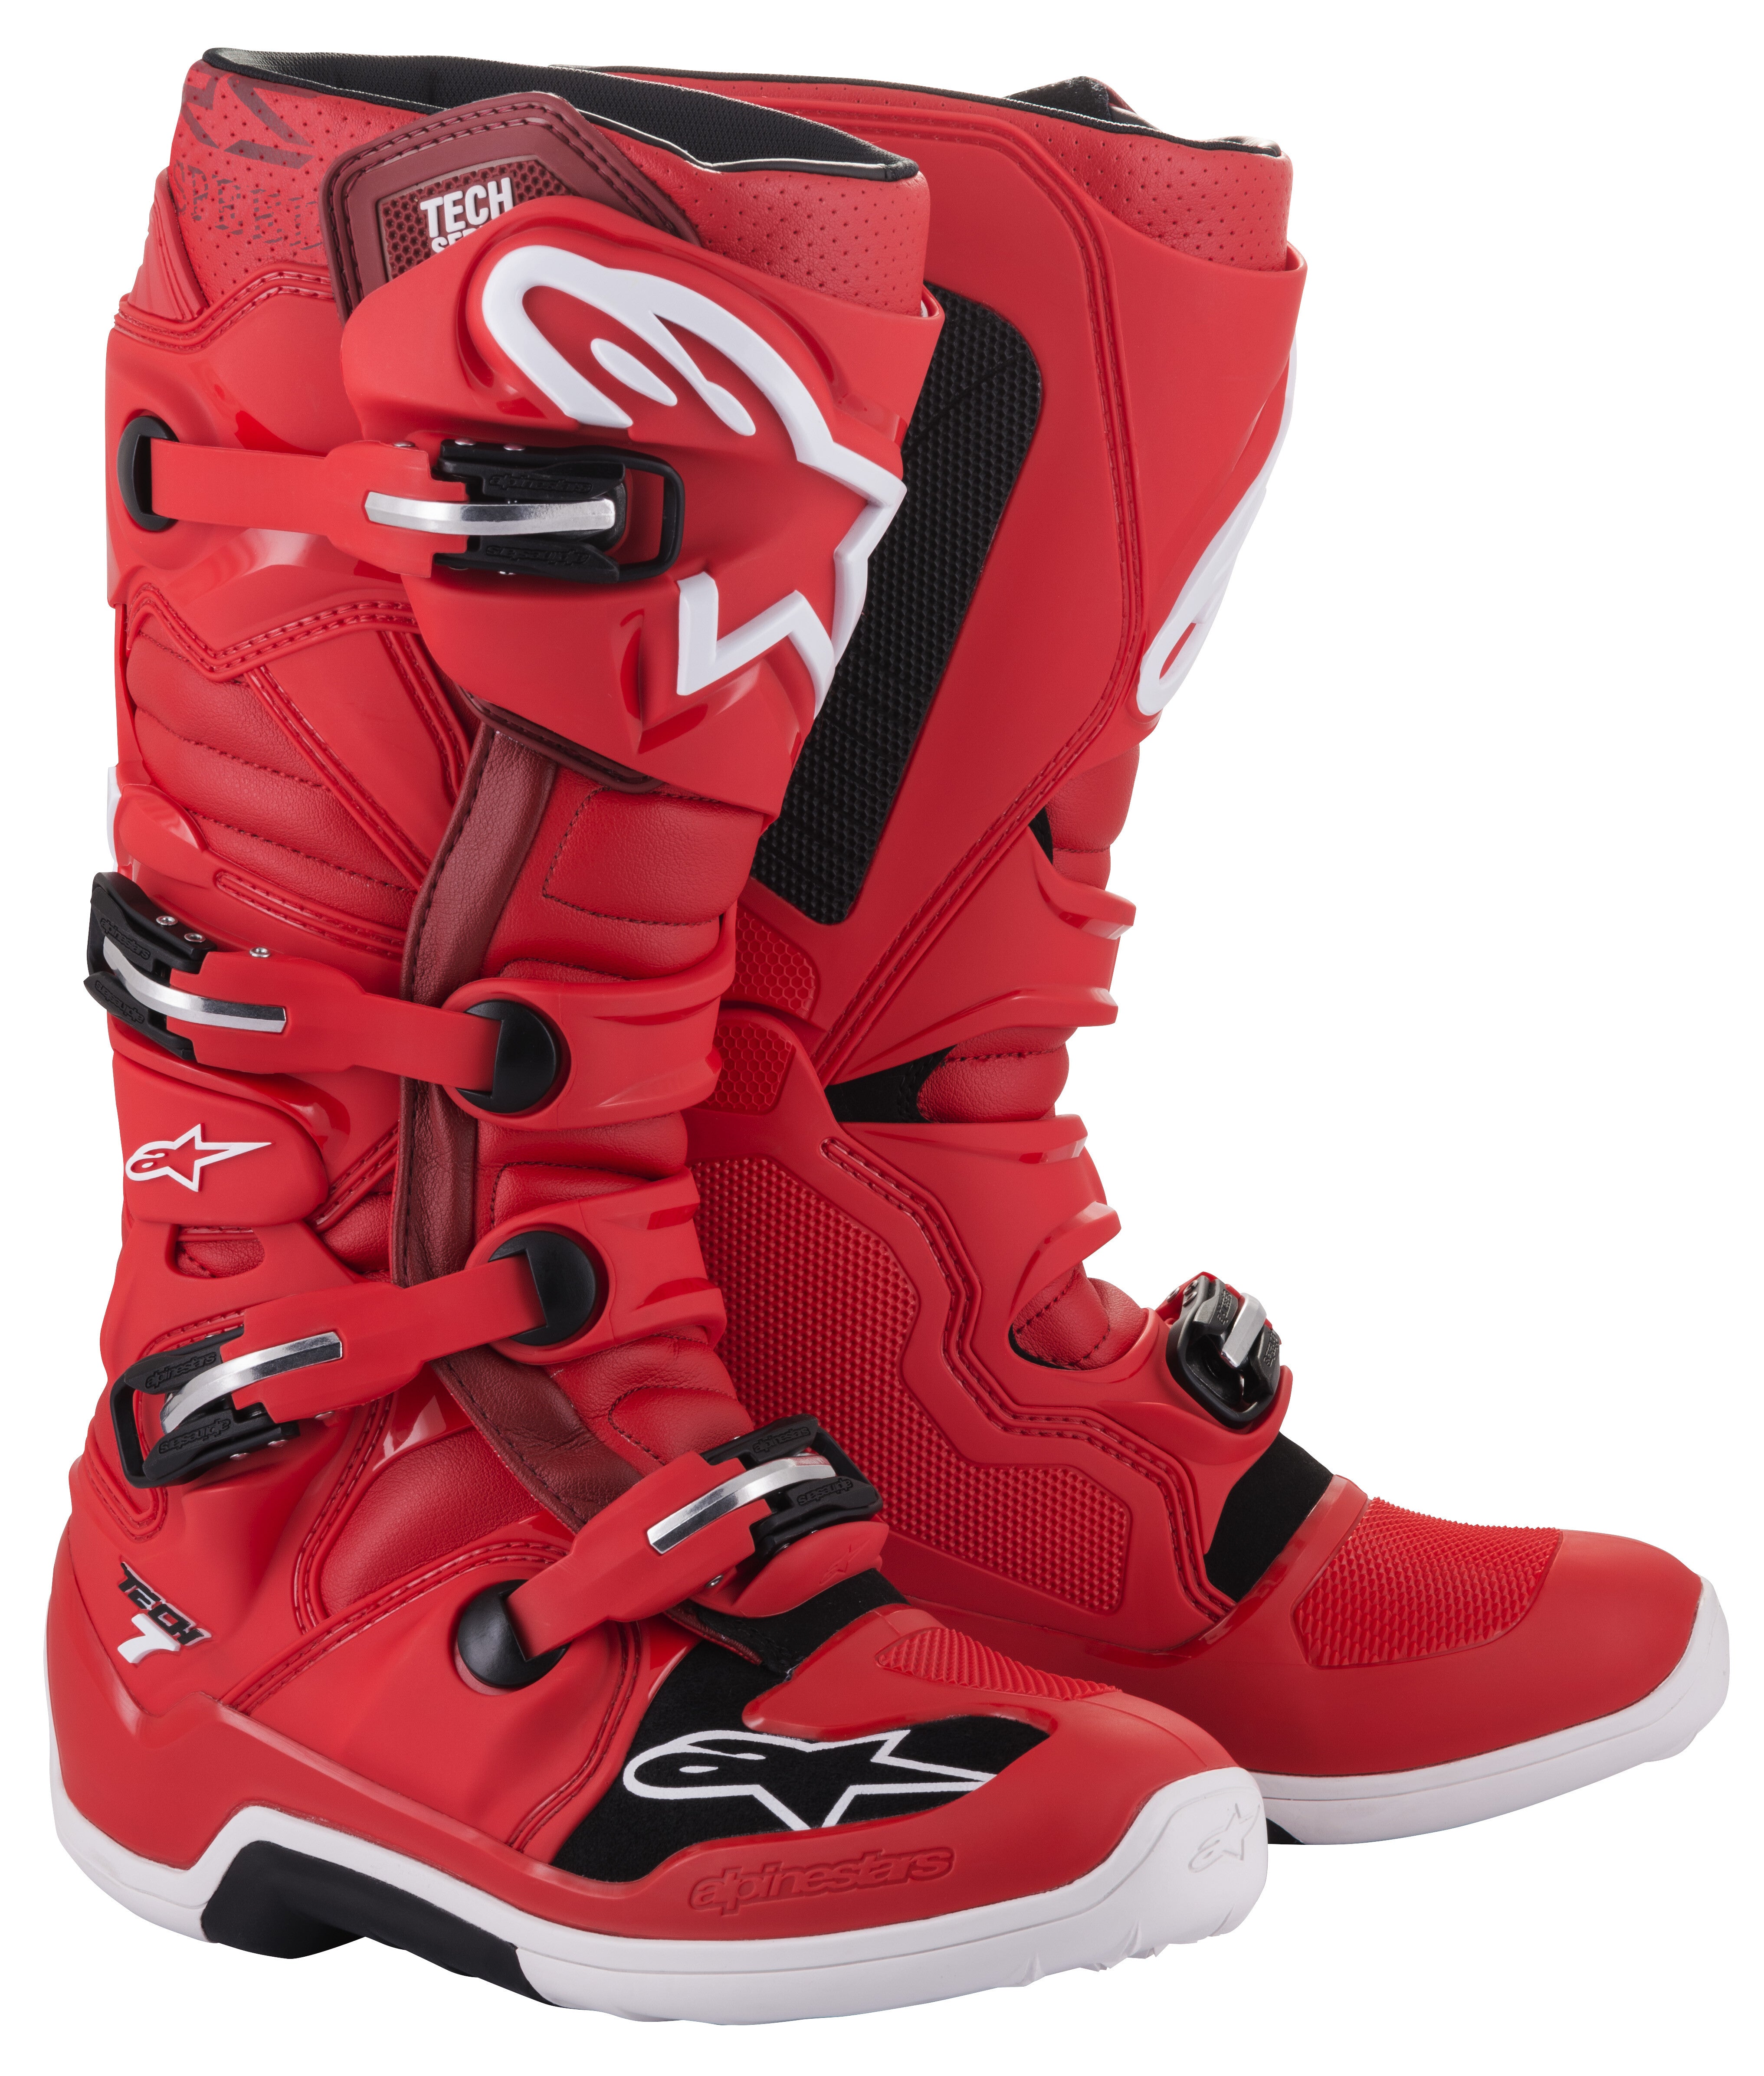 Alpinestars Tech 7 Mx Boots Red Us 12 2012014-30-12